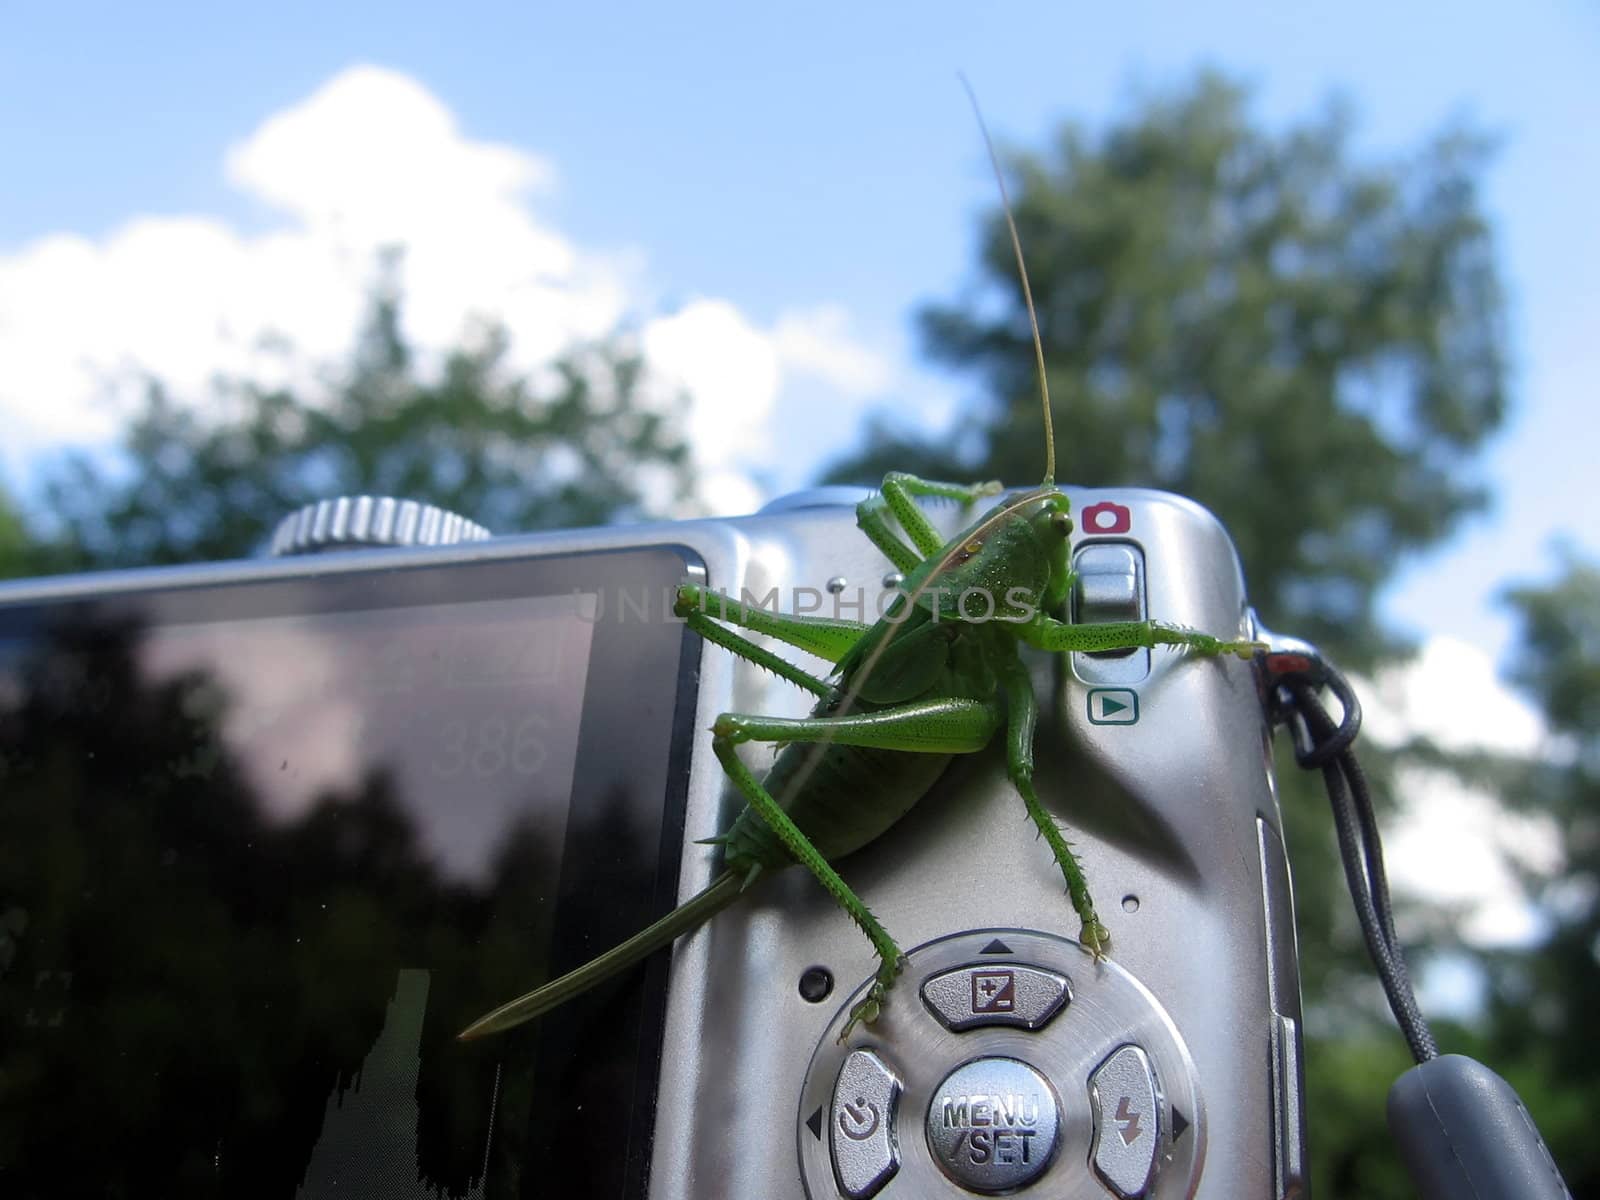 Cute green grasshopper sits on the digital camera